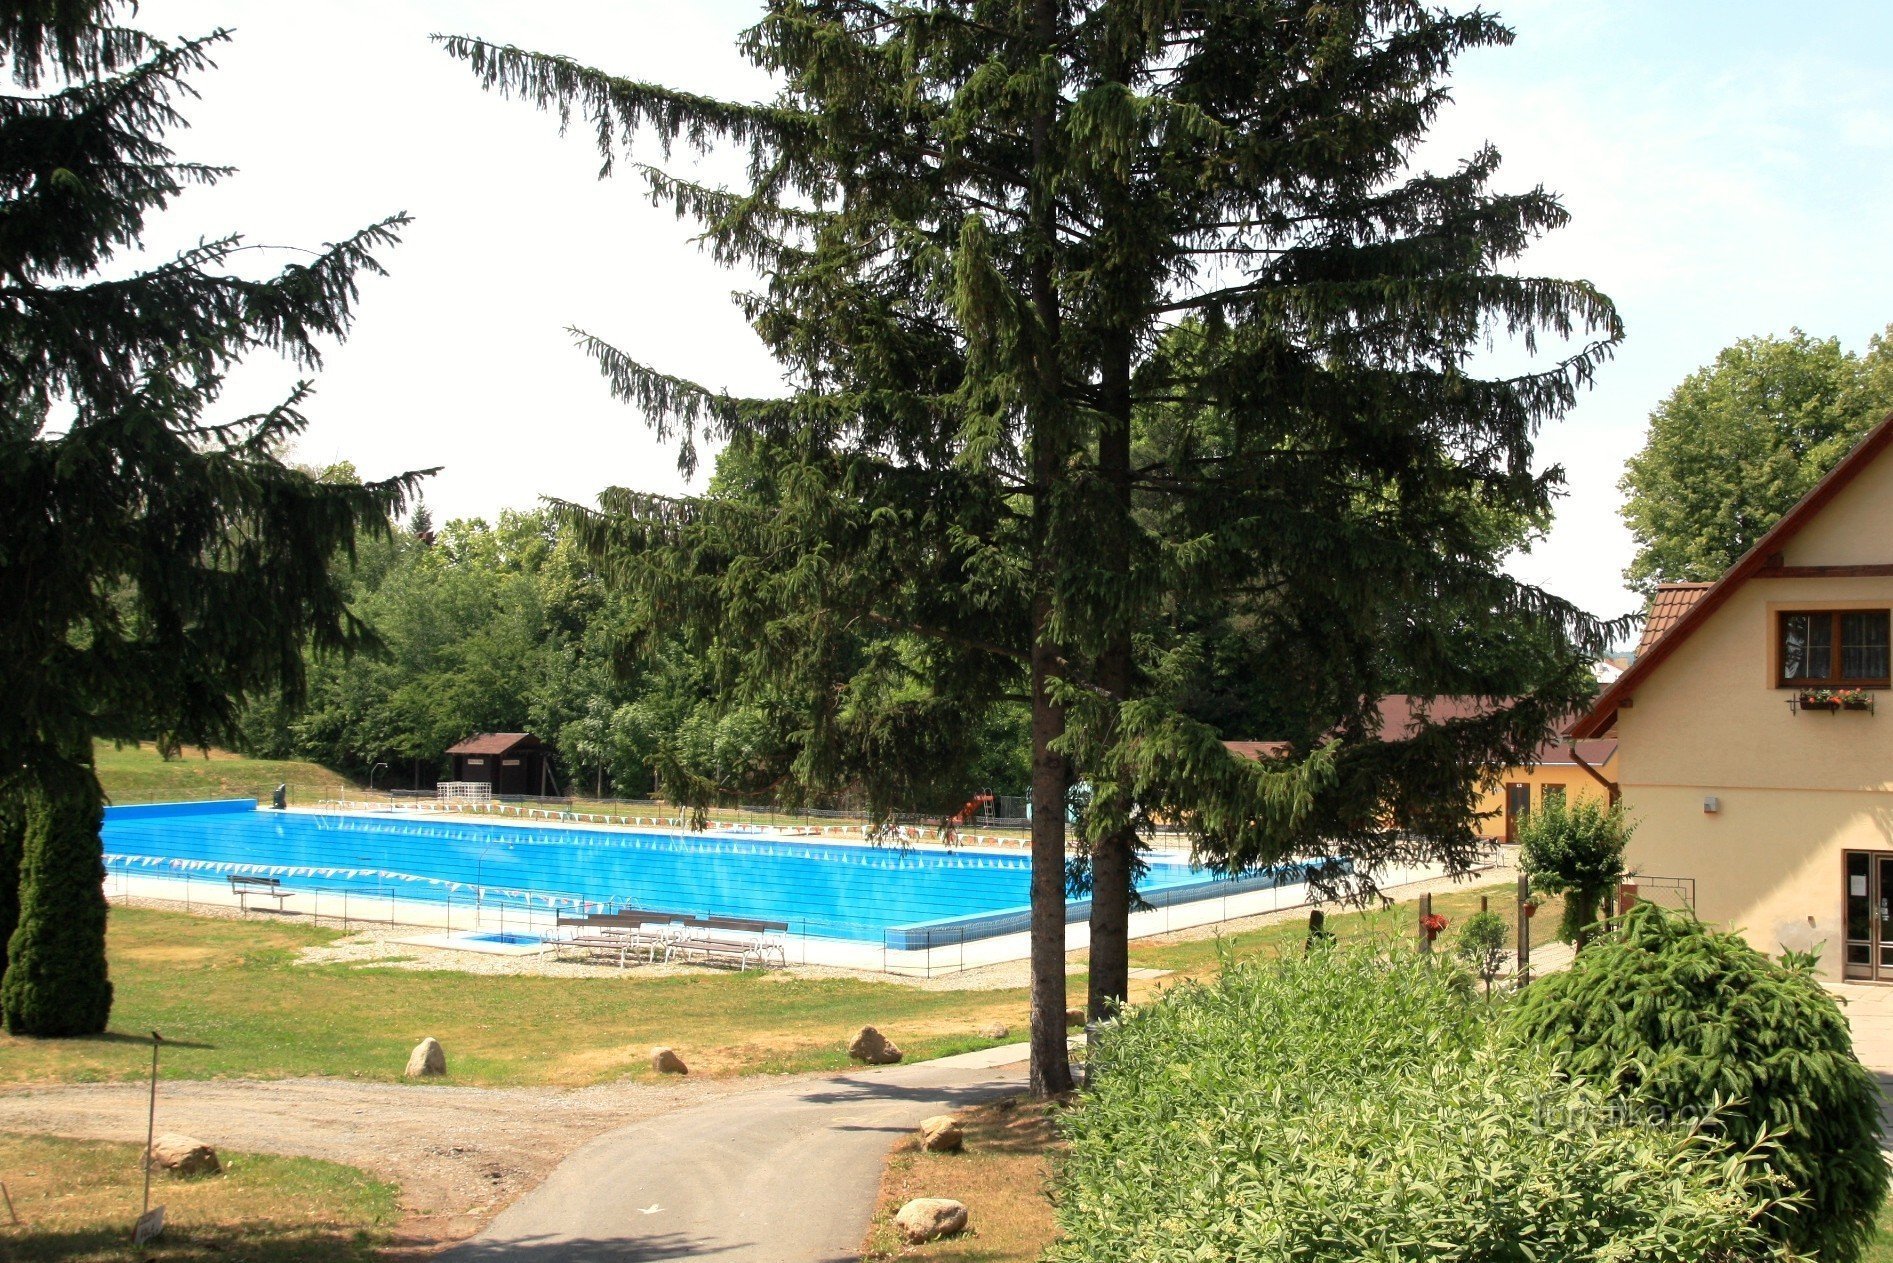 Morkovice-Slížany - swimmingpool